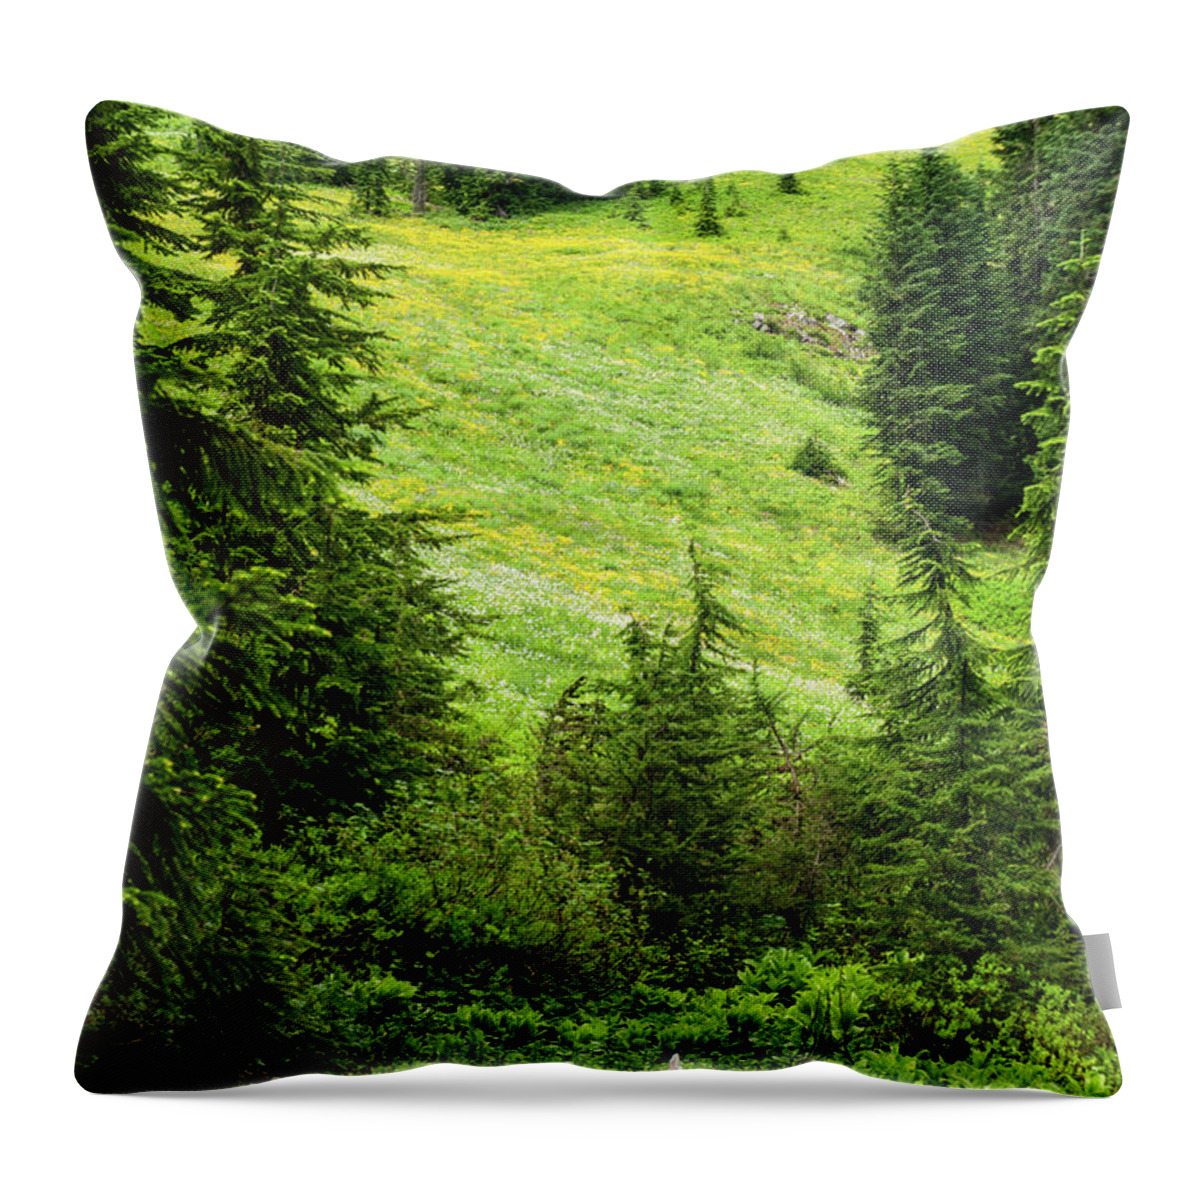 Hillside Throw Pillow featuring the photograph Hillside Alive by Louise Kornreich